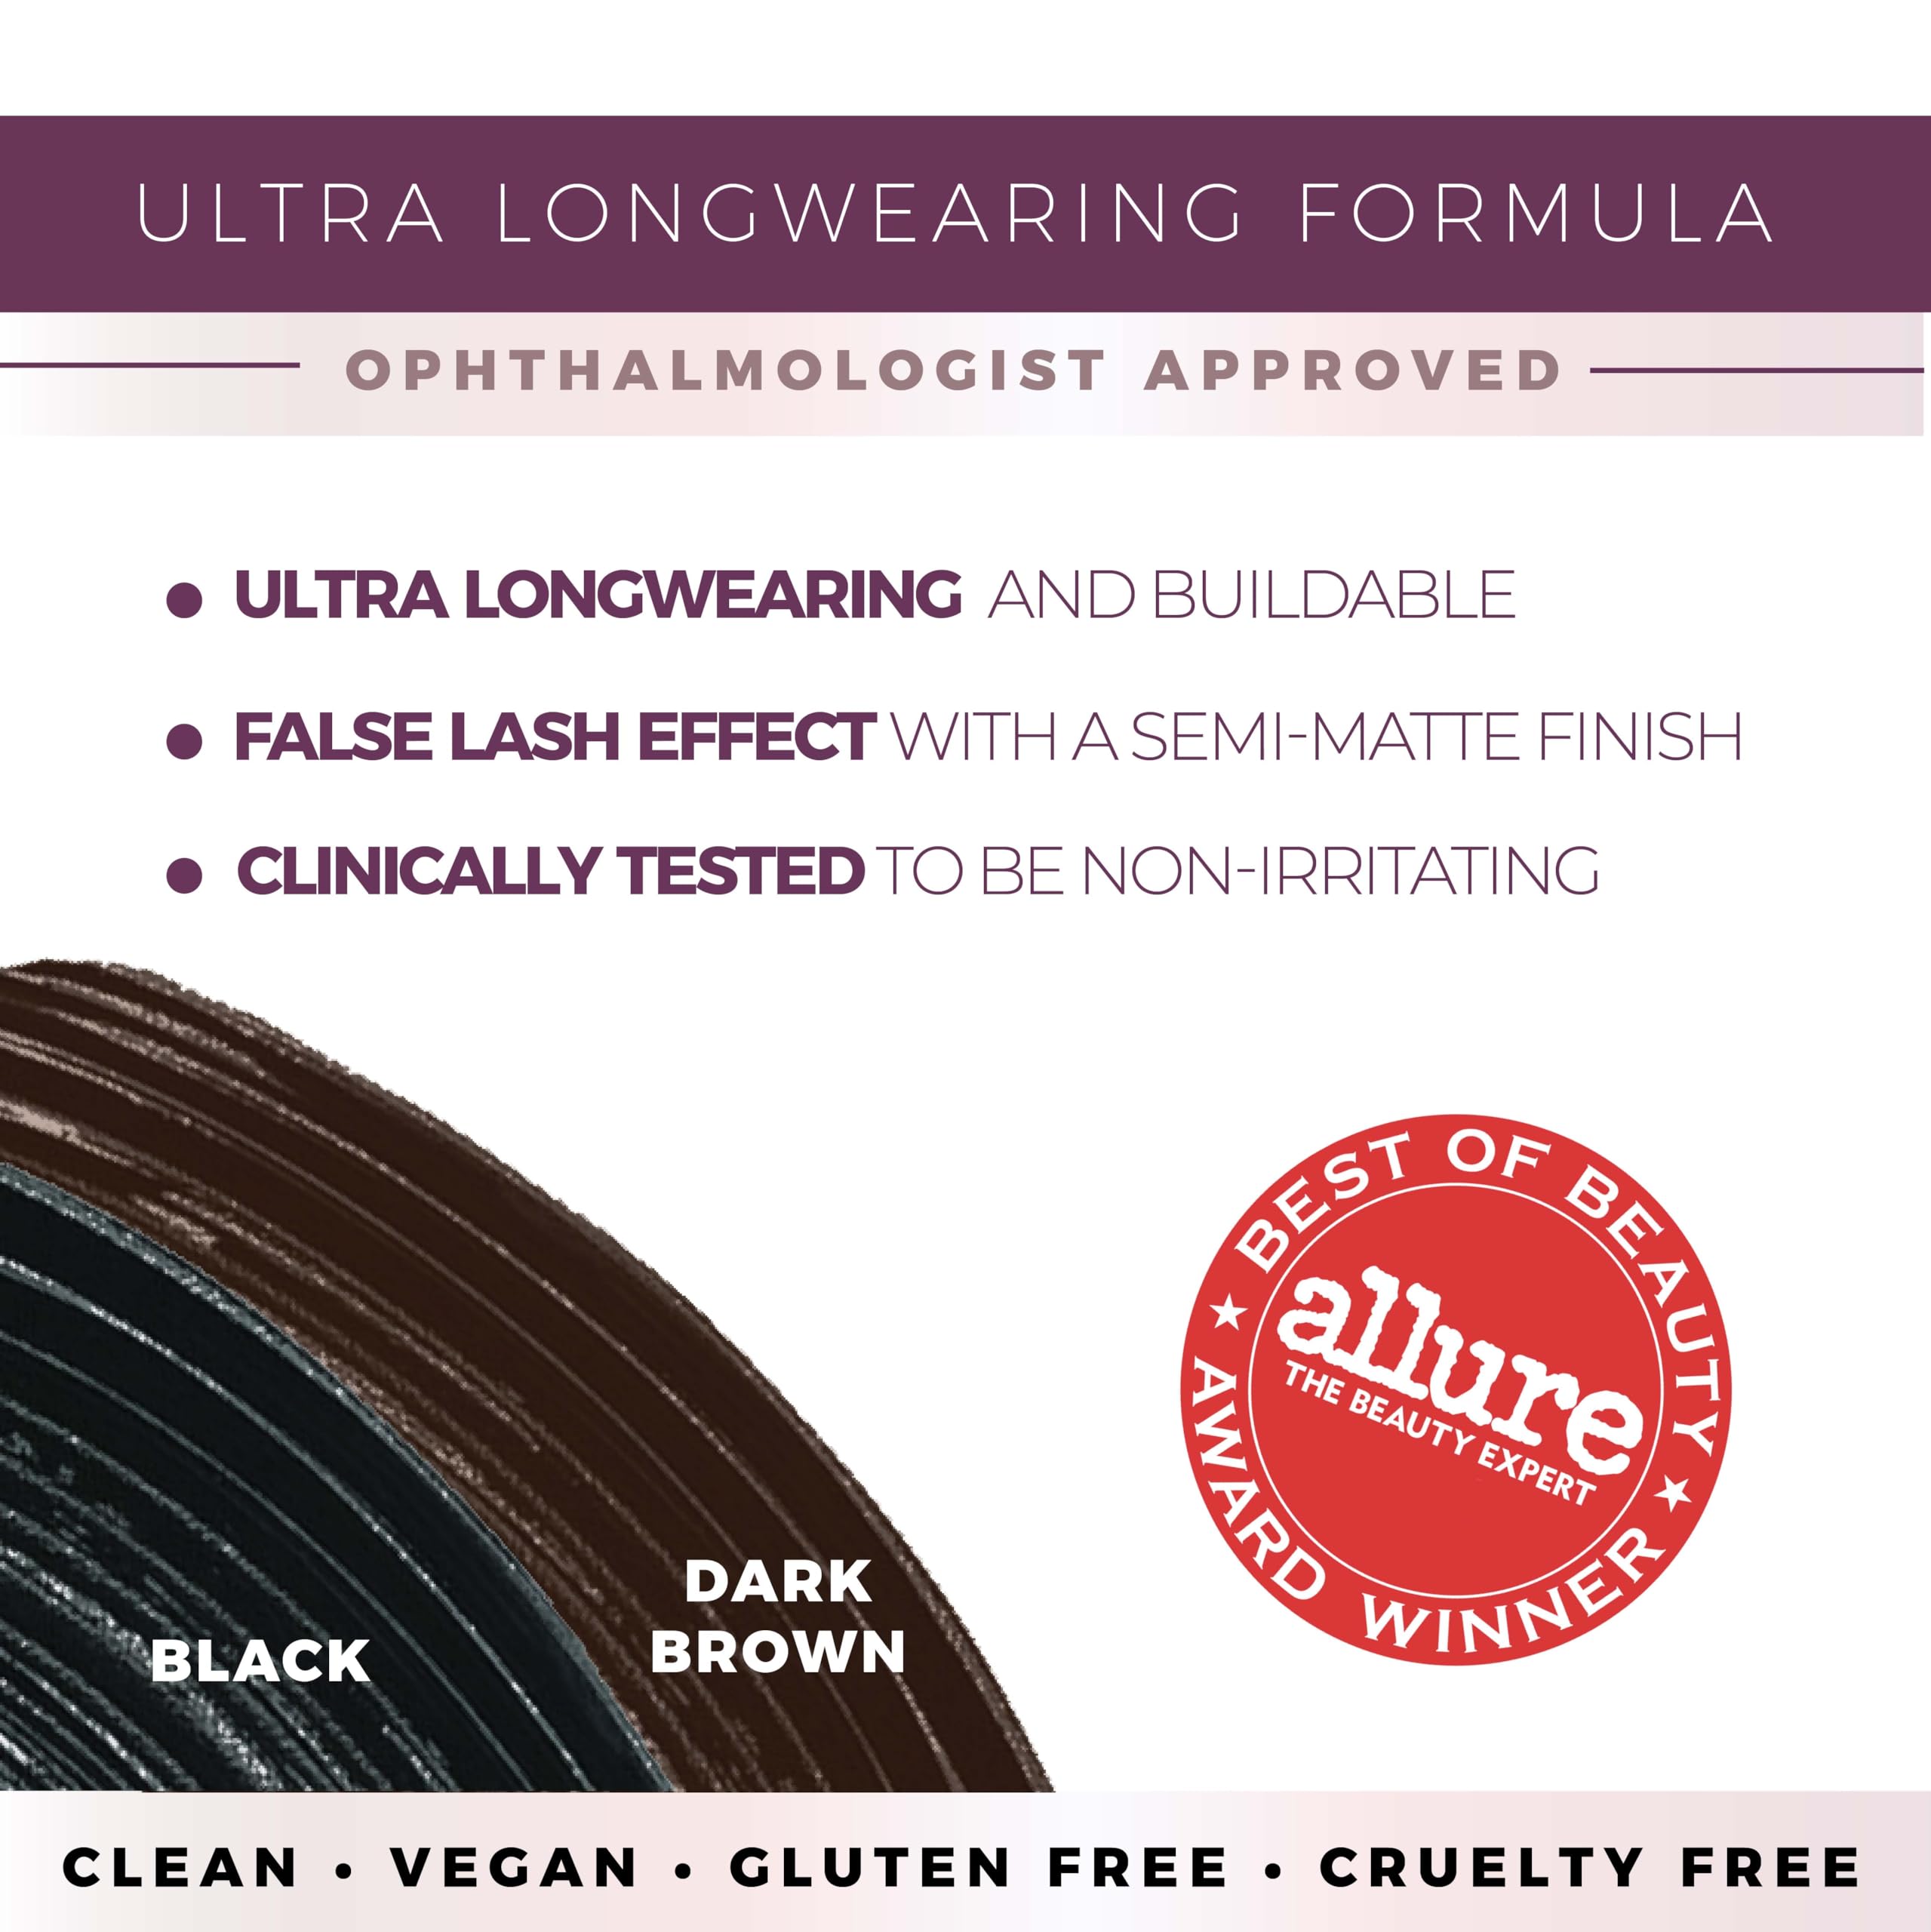 Blinc UltraVolume Tubing Mascara, Volumizing, Lengthening and Curling Mascara, Ultra-Longwearing Washable Mascara, Clean, Vegan and Cruelty-Free, 9mL / 0.30 Fl Oz (Dark Brown)